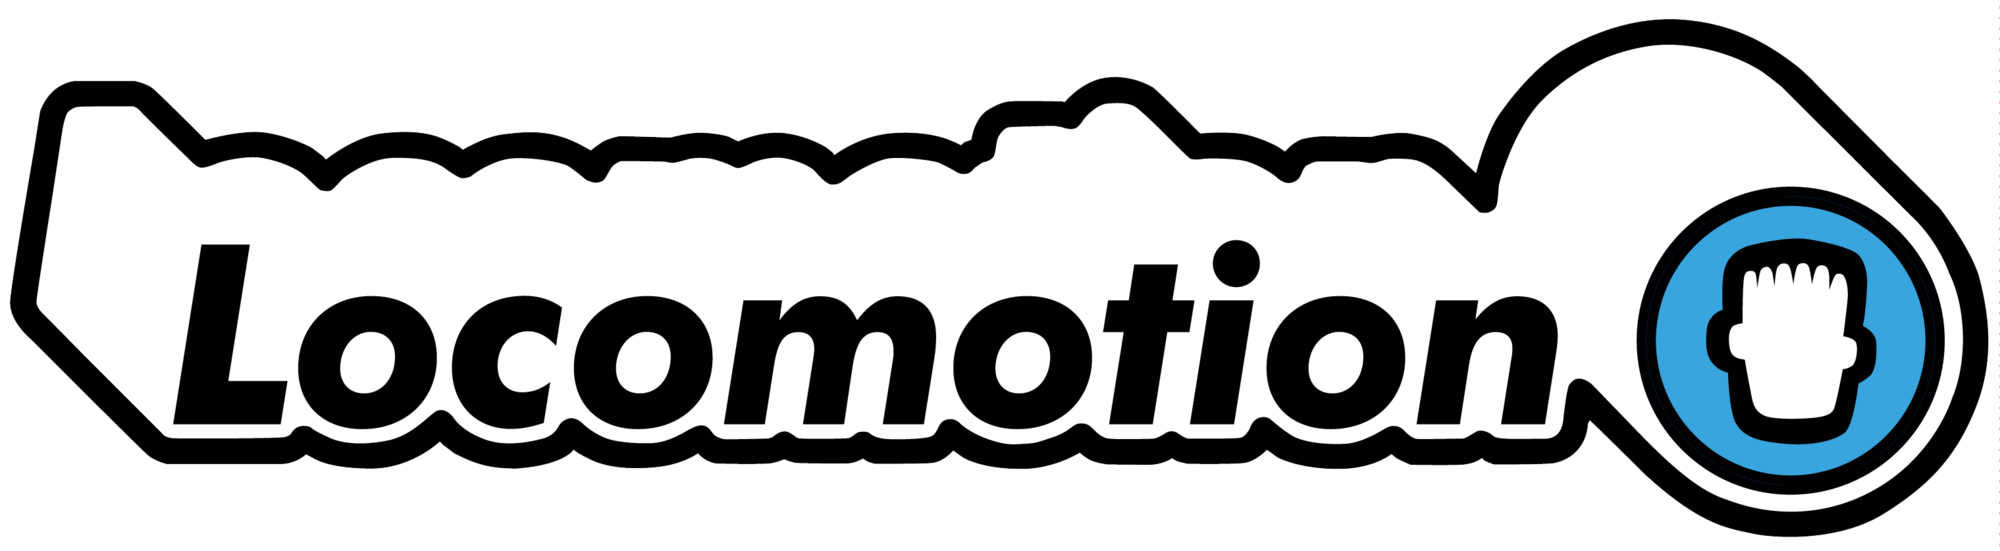 Locomotion Logo - Chronoteve (Ringia)